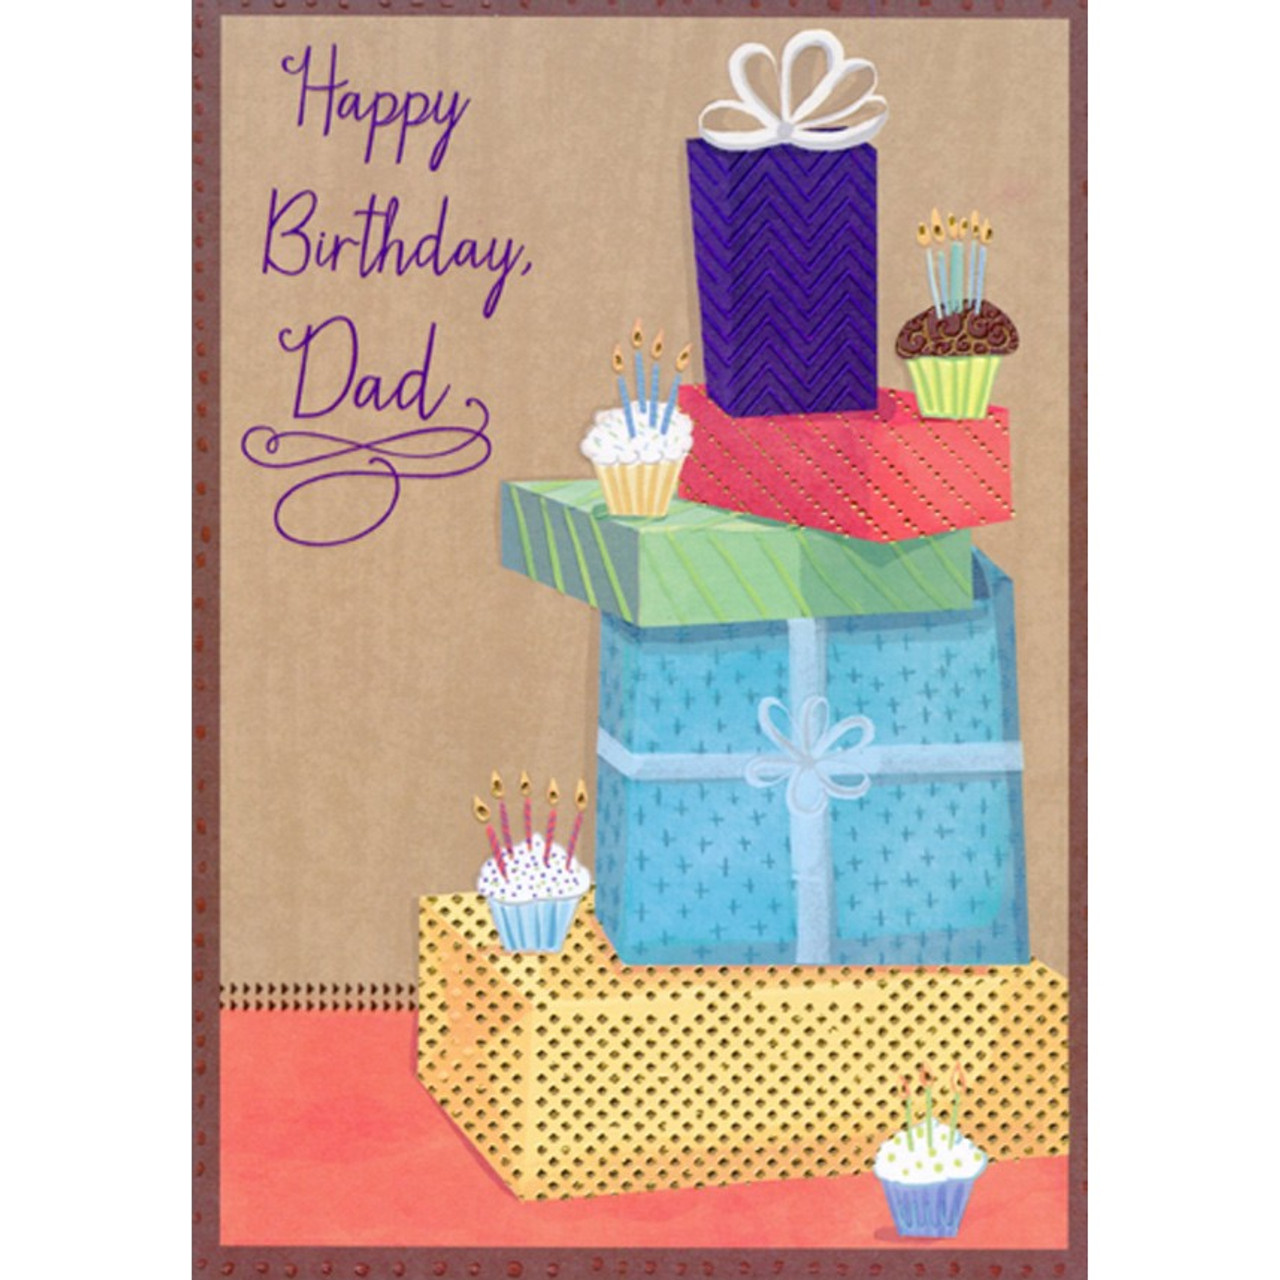 creative birthday card for dad